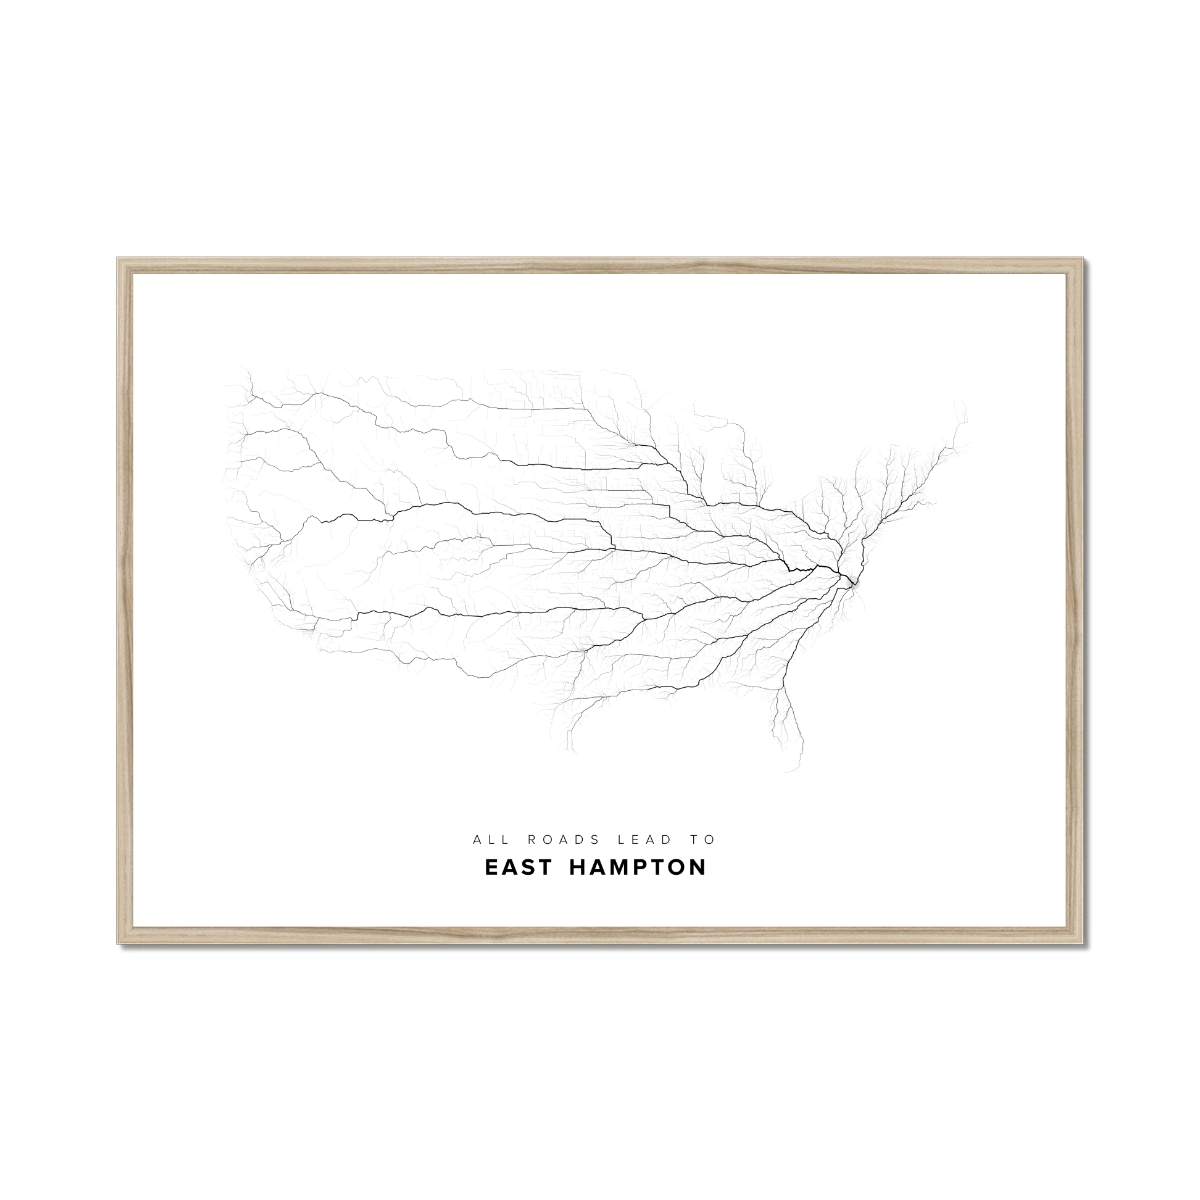 All roads lead to East Hampton (United States of America) Fine Art Map Print